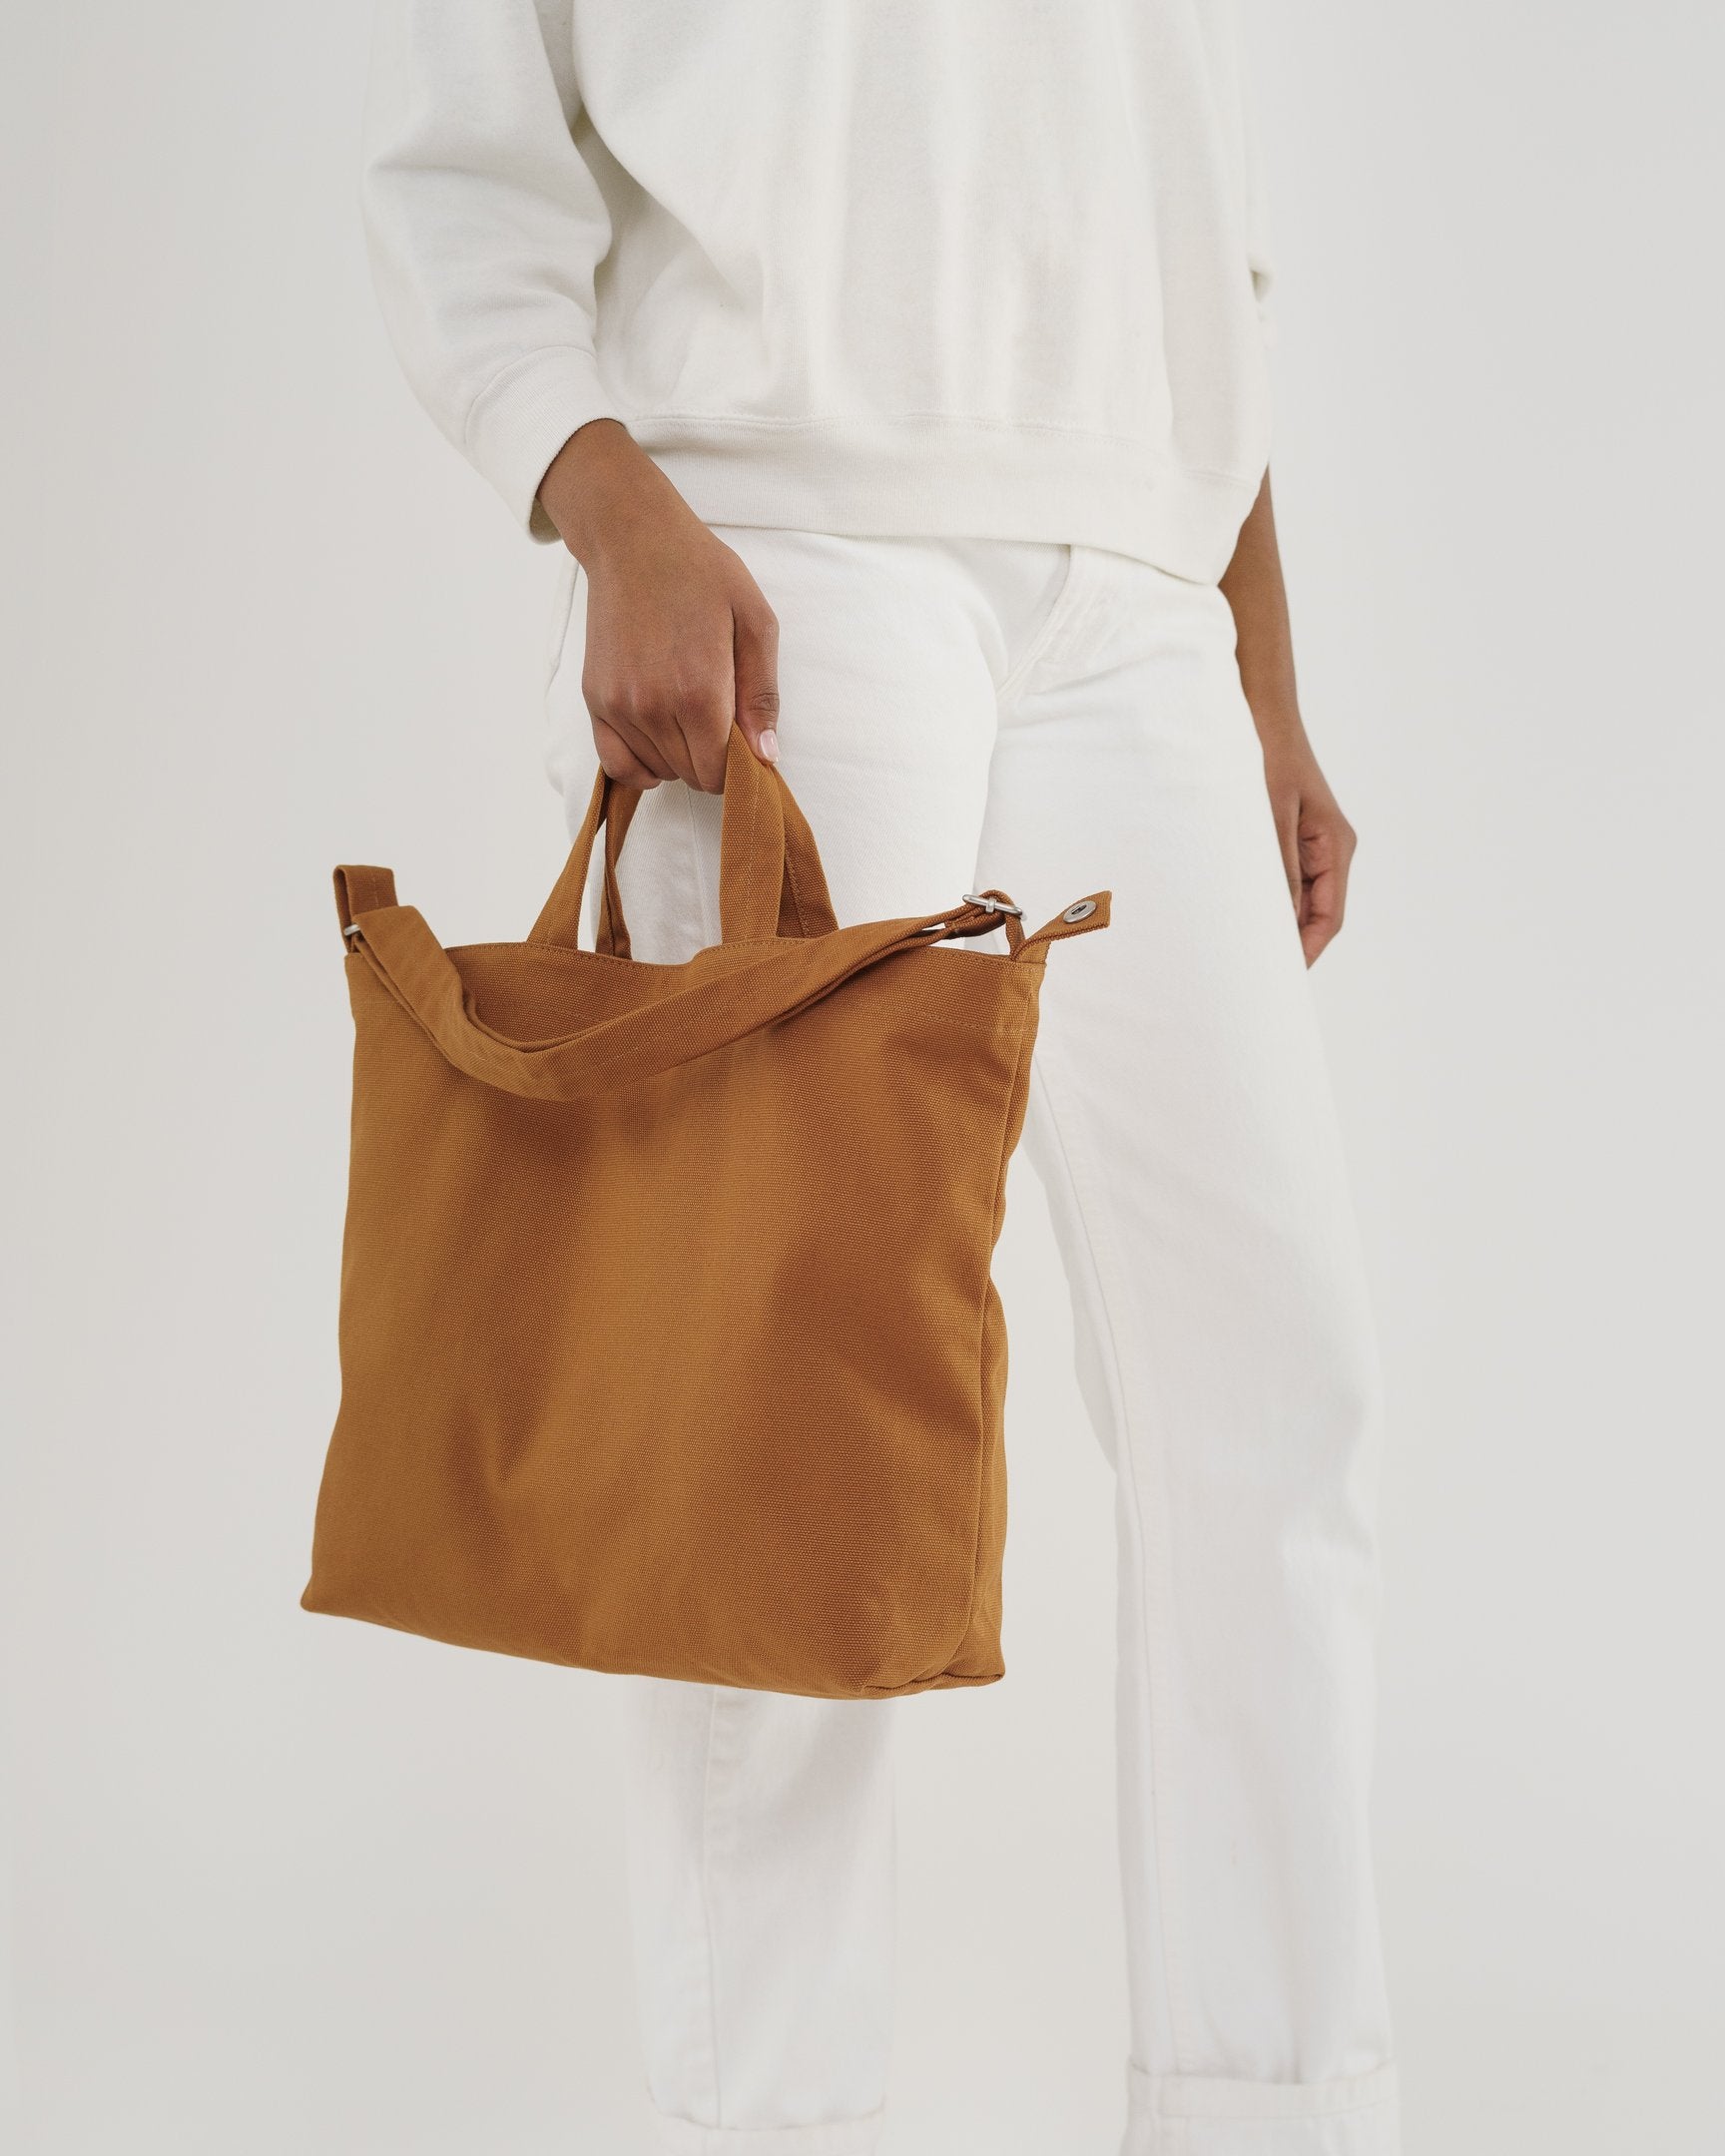 Practical Summer Bags with the BAGGU Horizontal Duck Bag